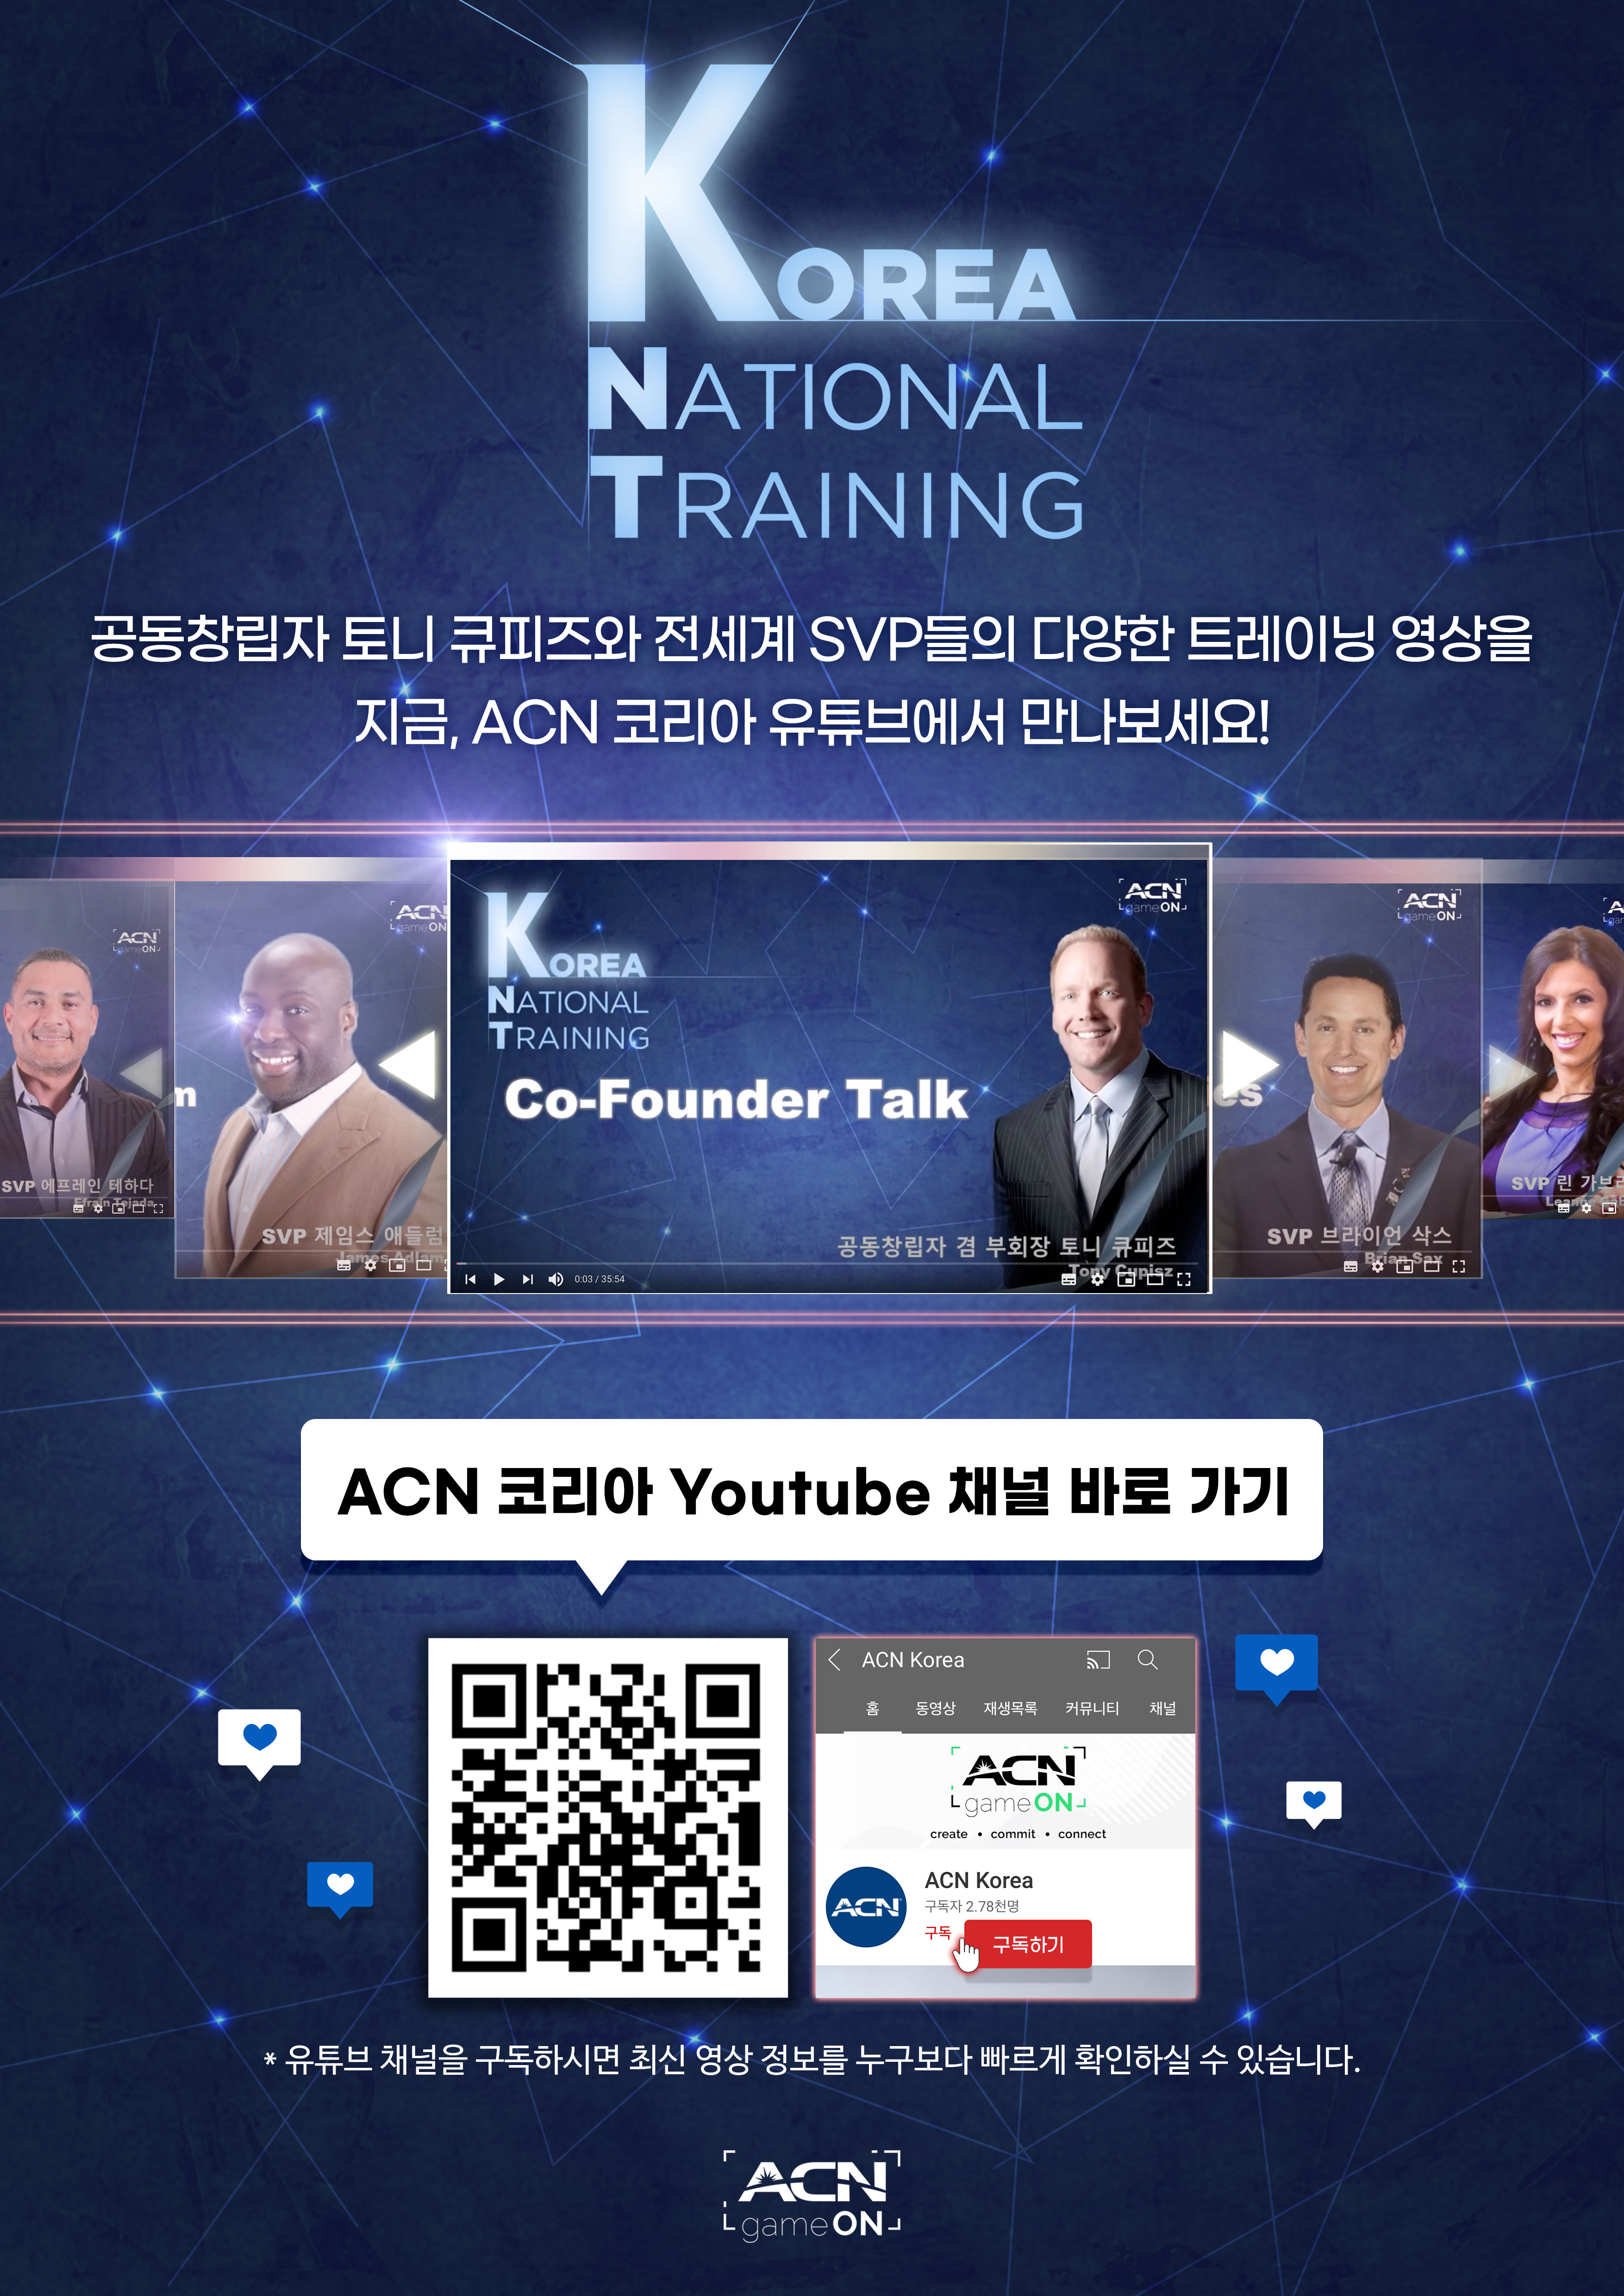 Korea National Training - ACN 코리아 YouTube 업로드